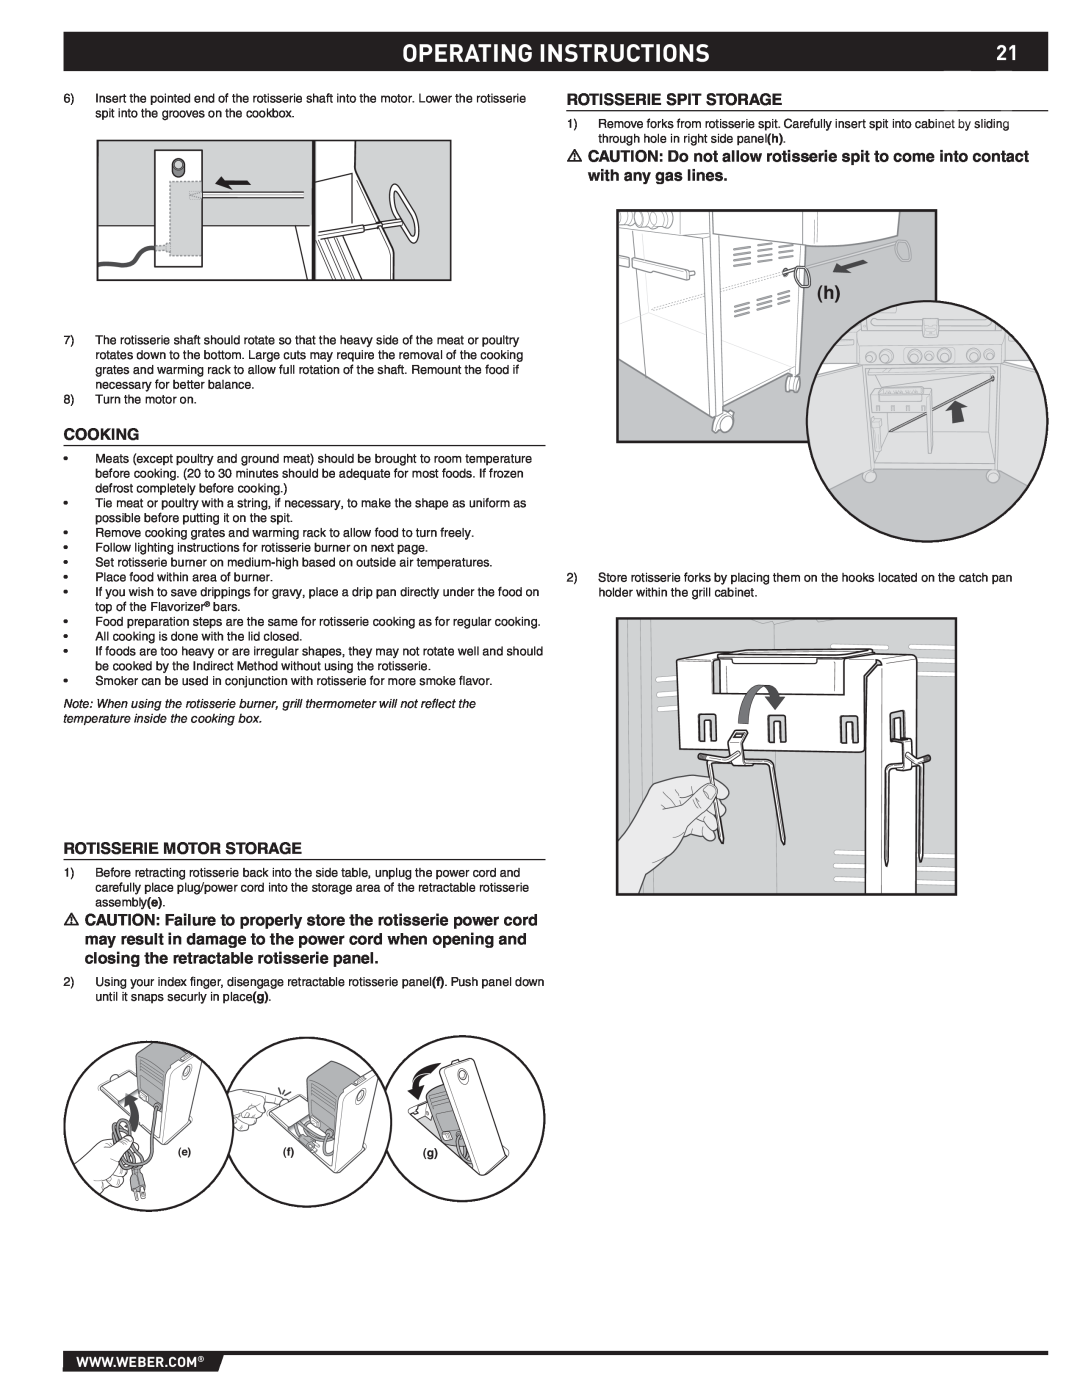 Weber S-470TM manual Operating Instructions, Cooking, Rotisserie Motor Storage, Rotisserie Spit Storage 